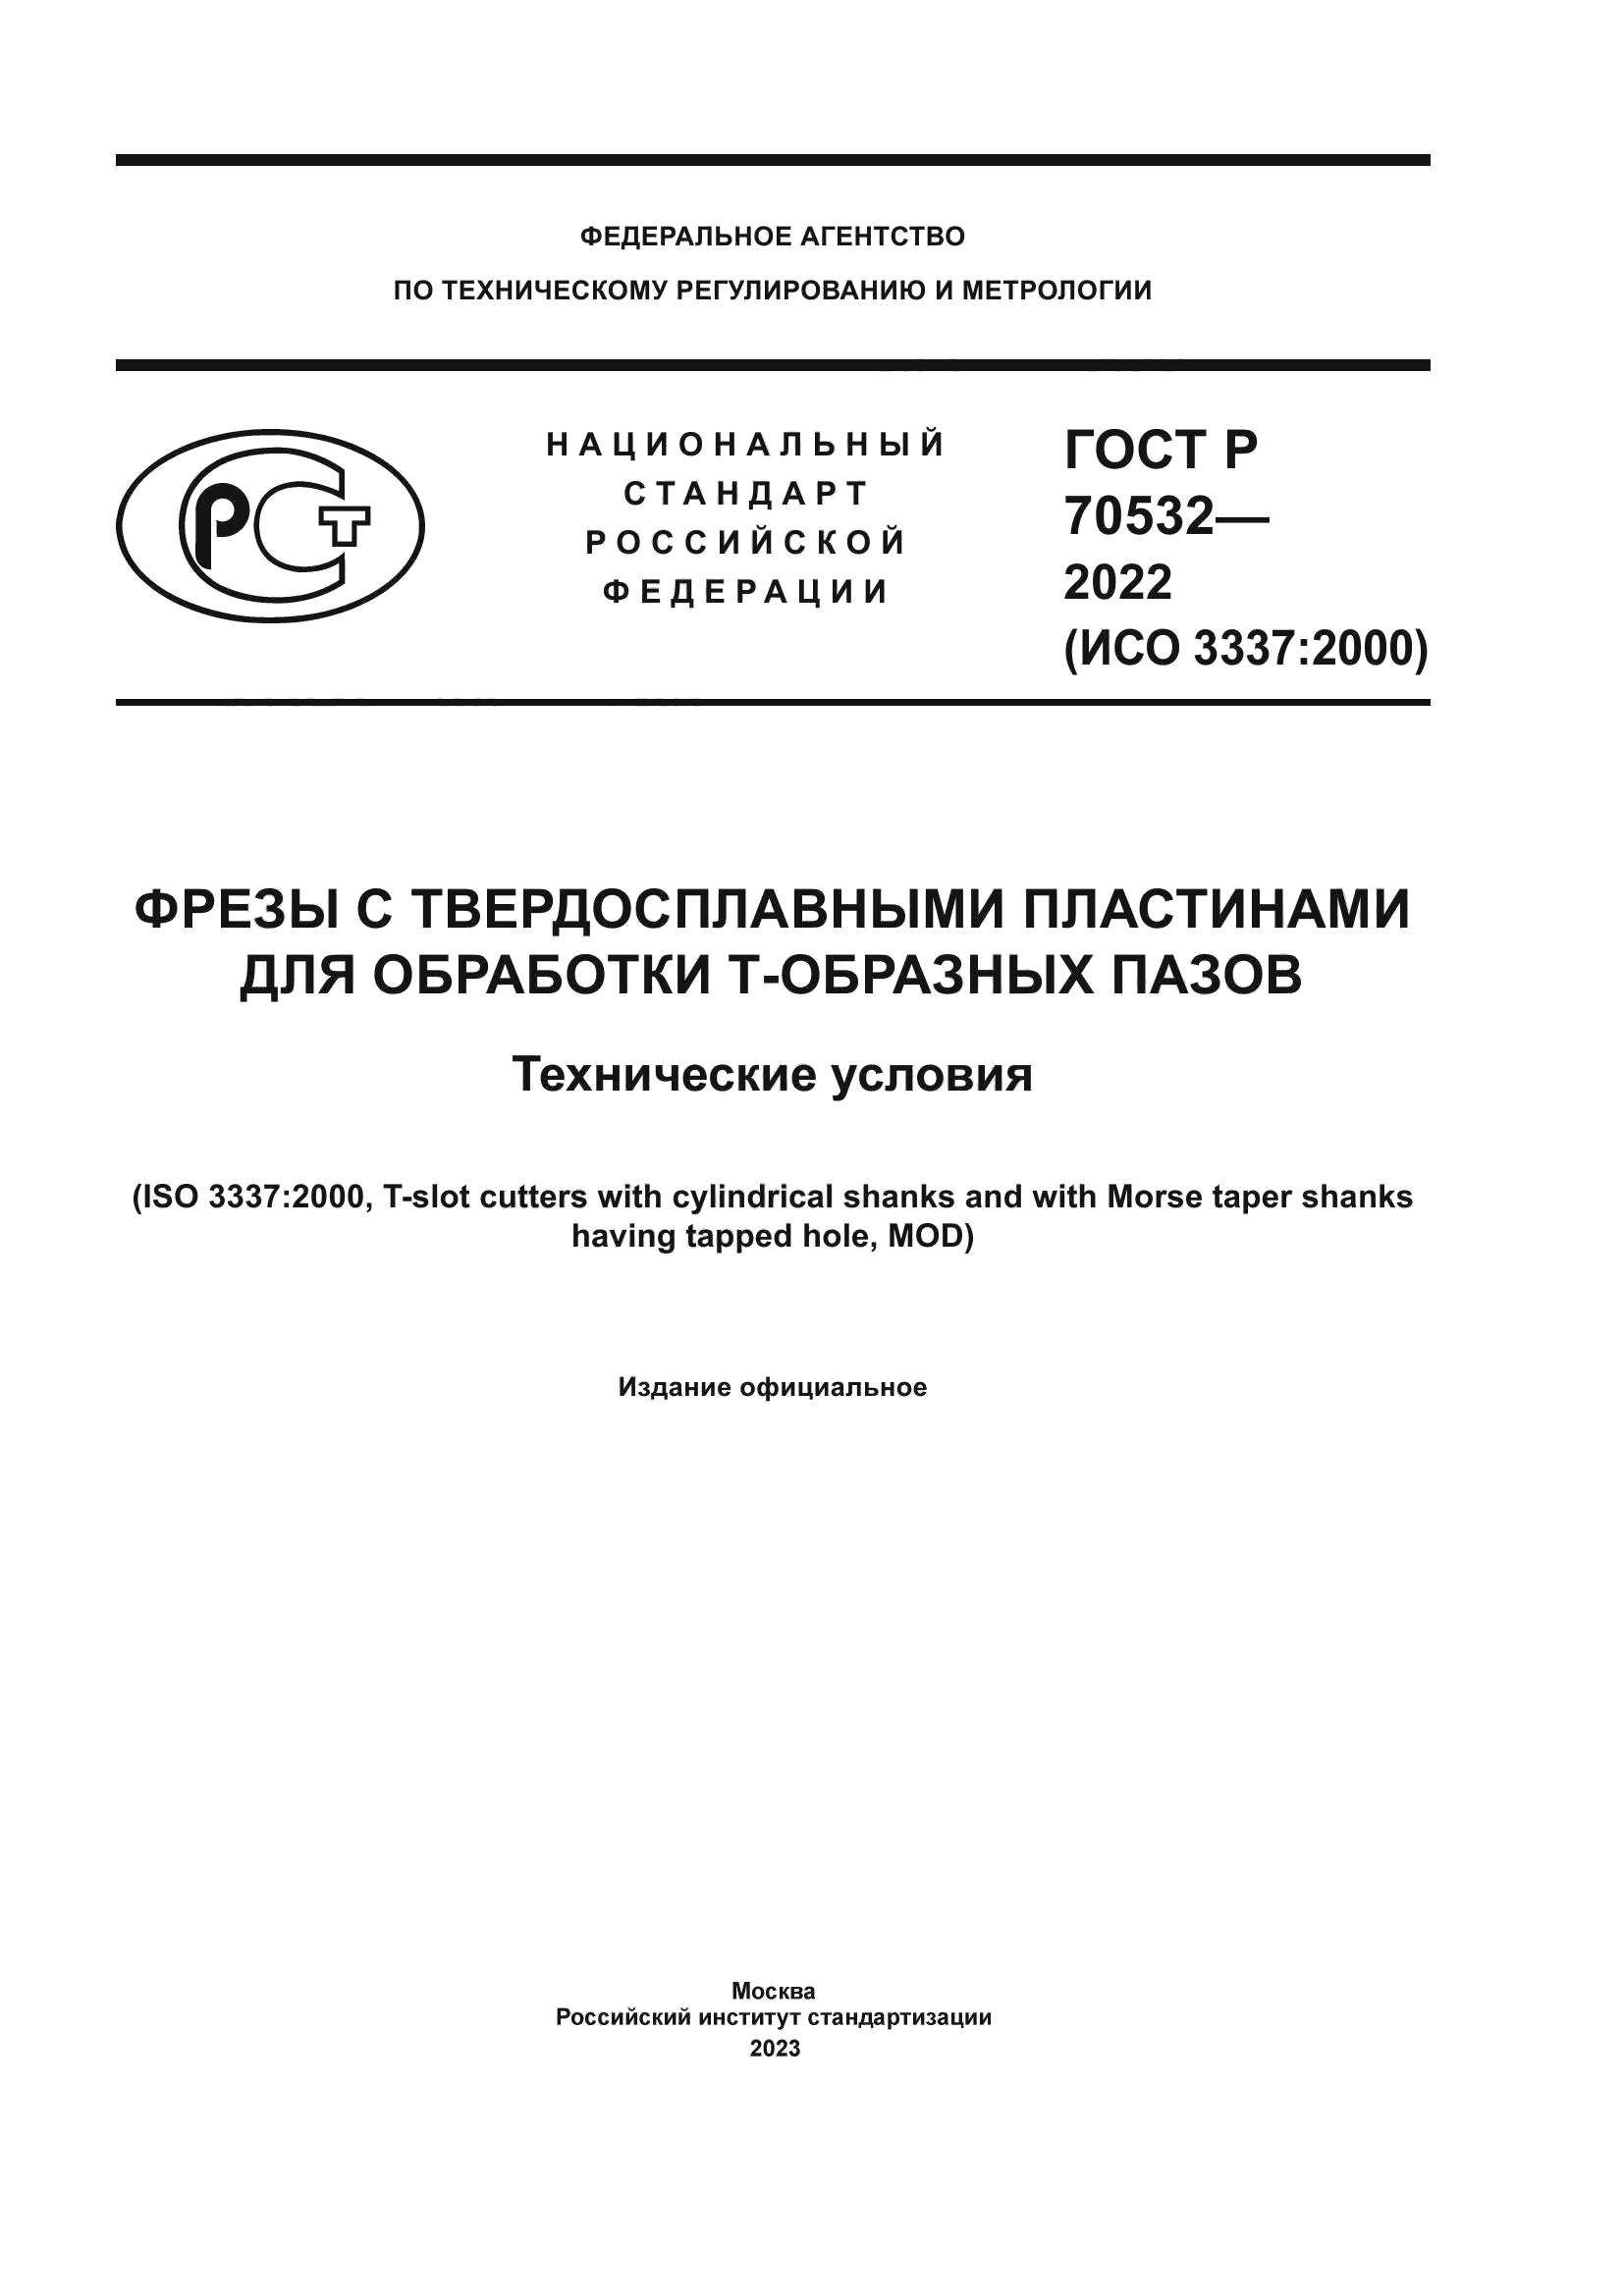 ГОСТ Р 70532-2022